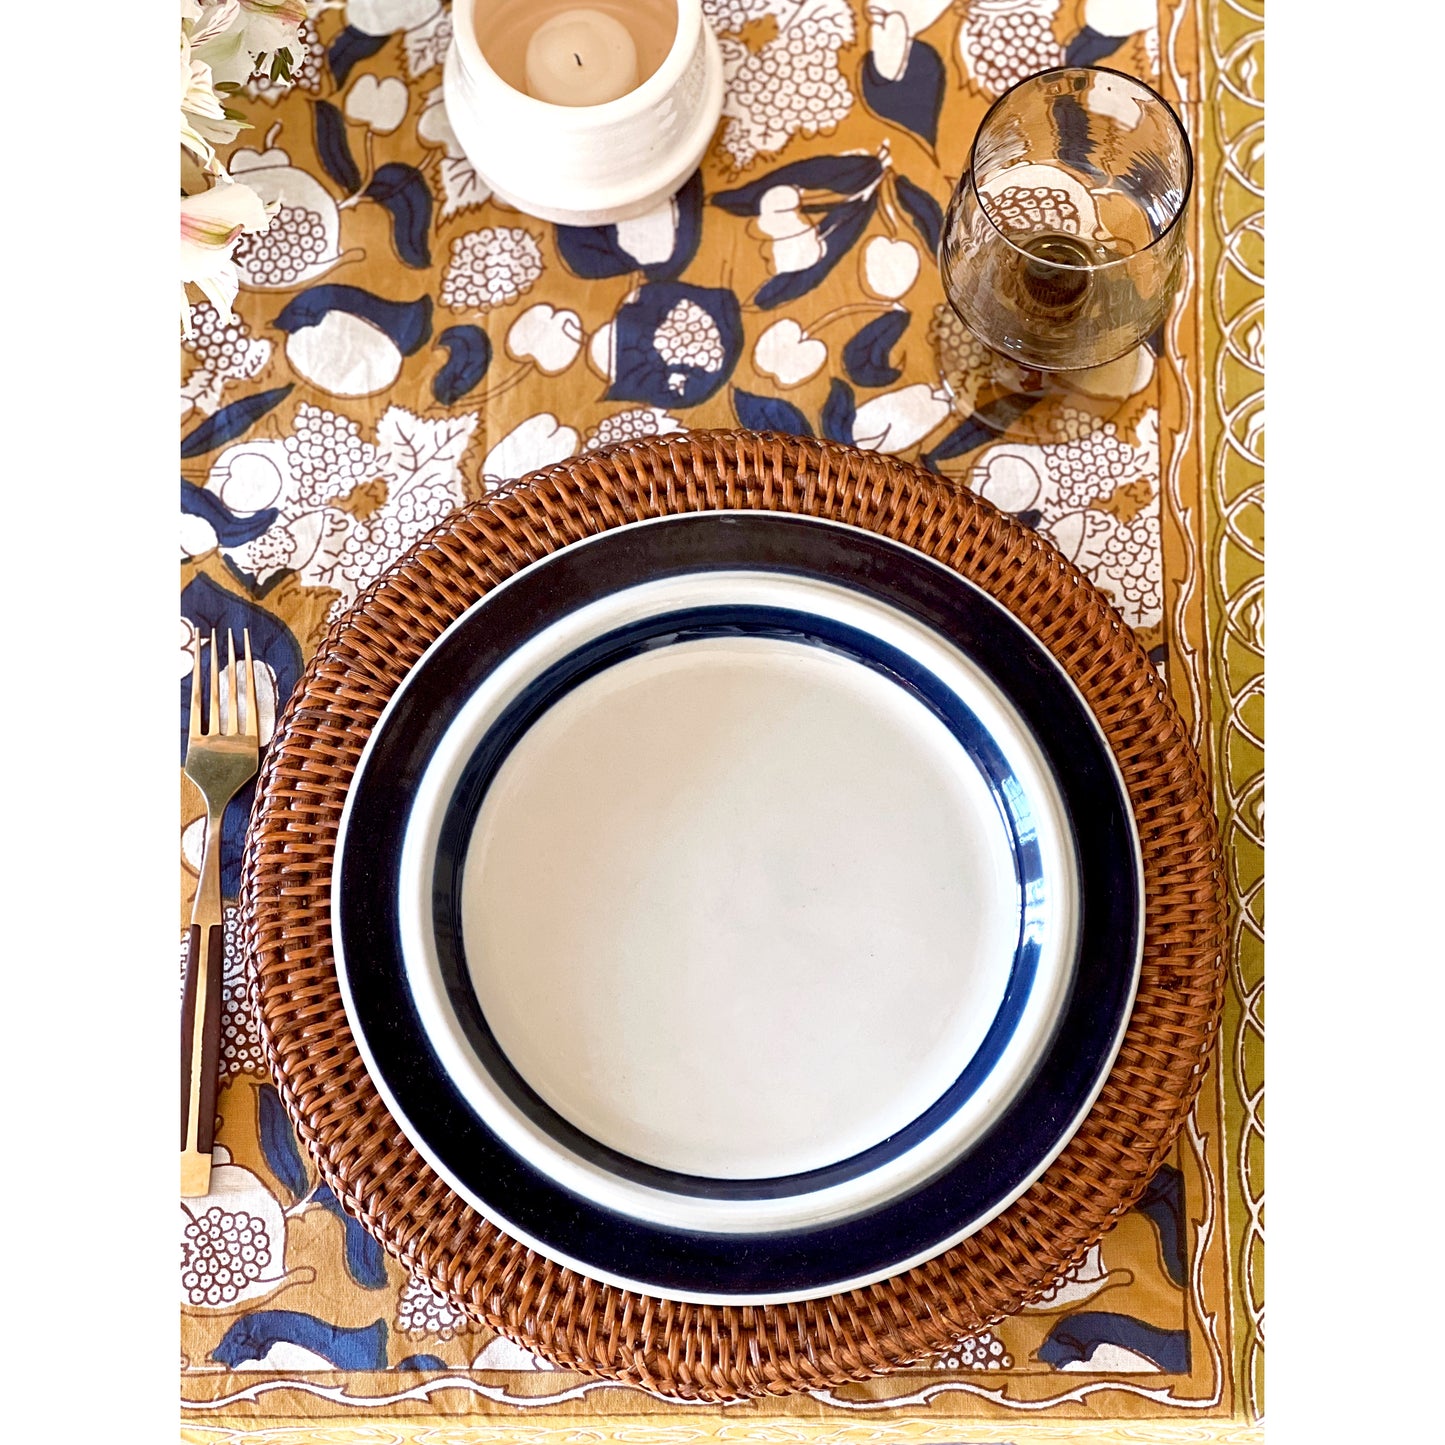 Arabia of Finland Anemone Blue Dinner Plate